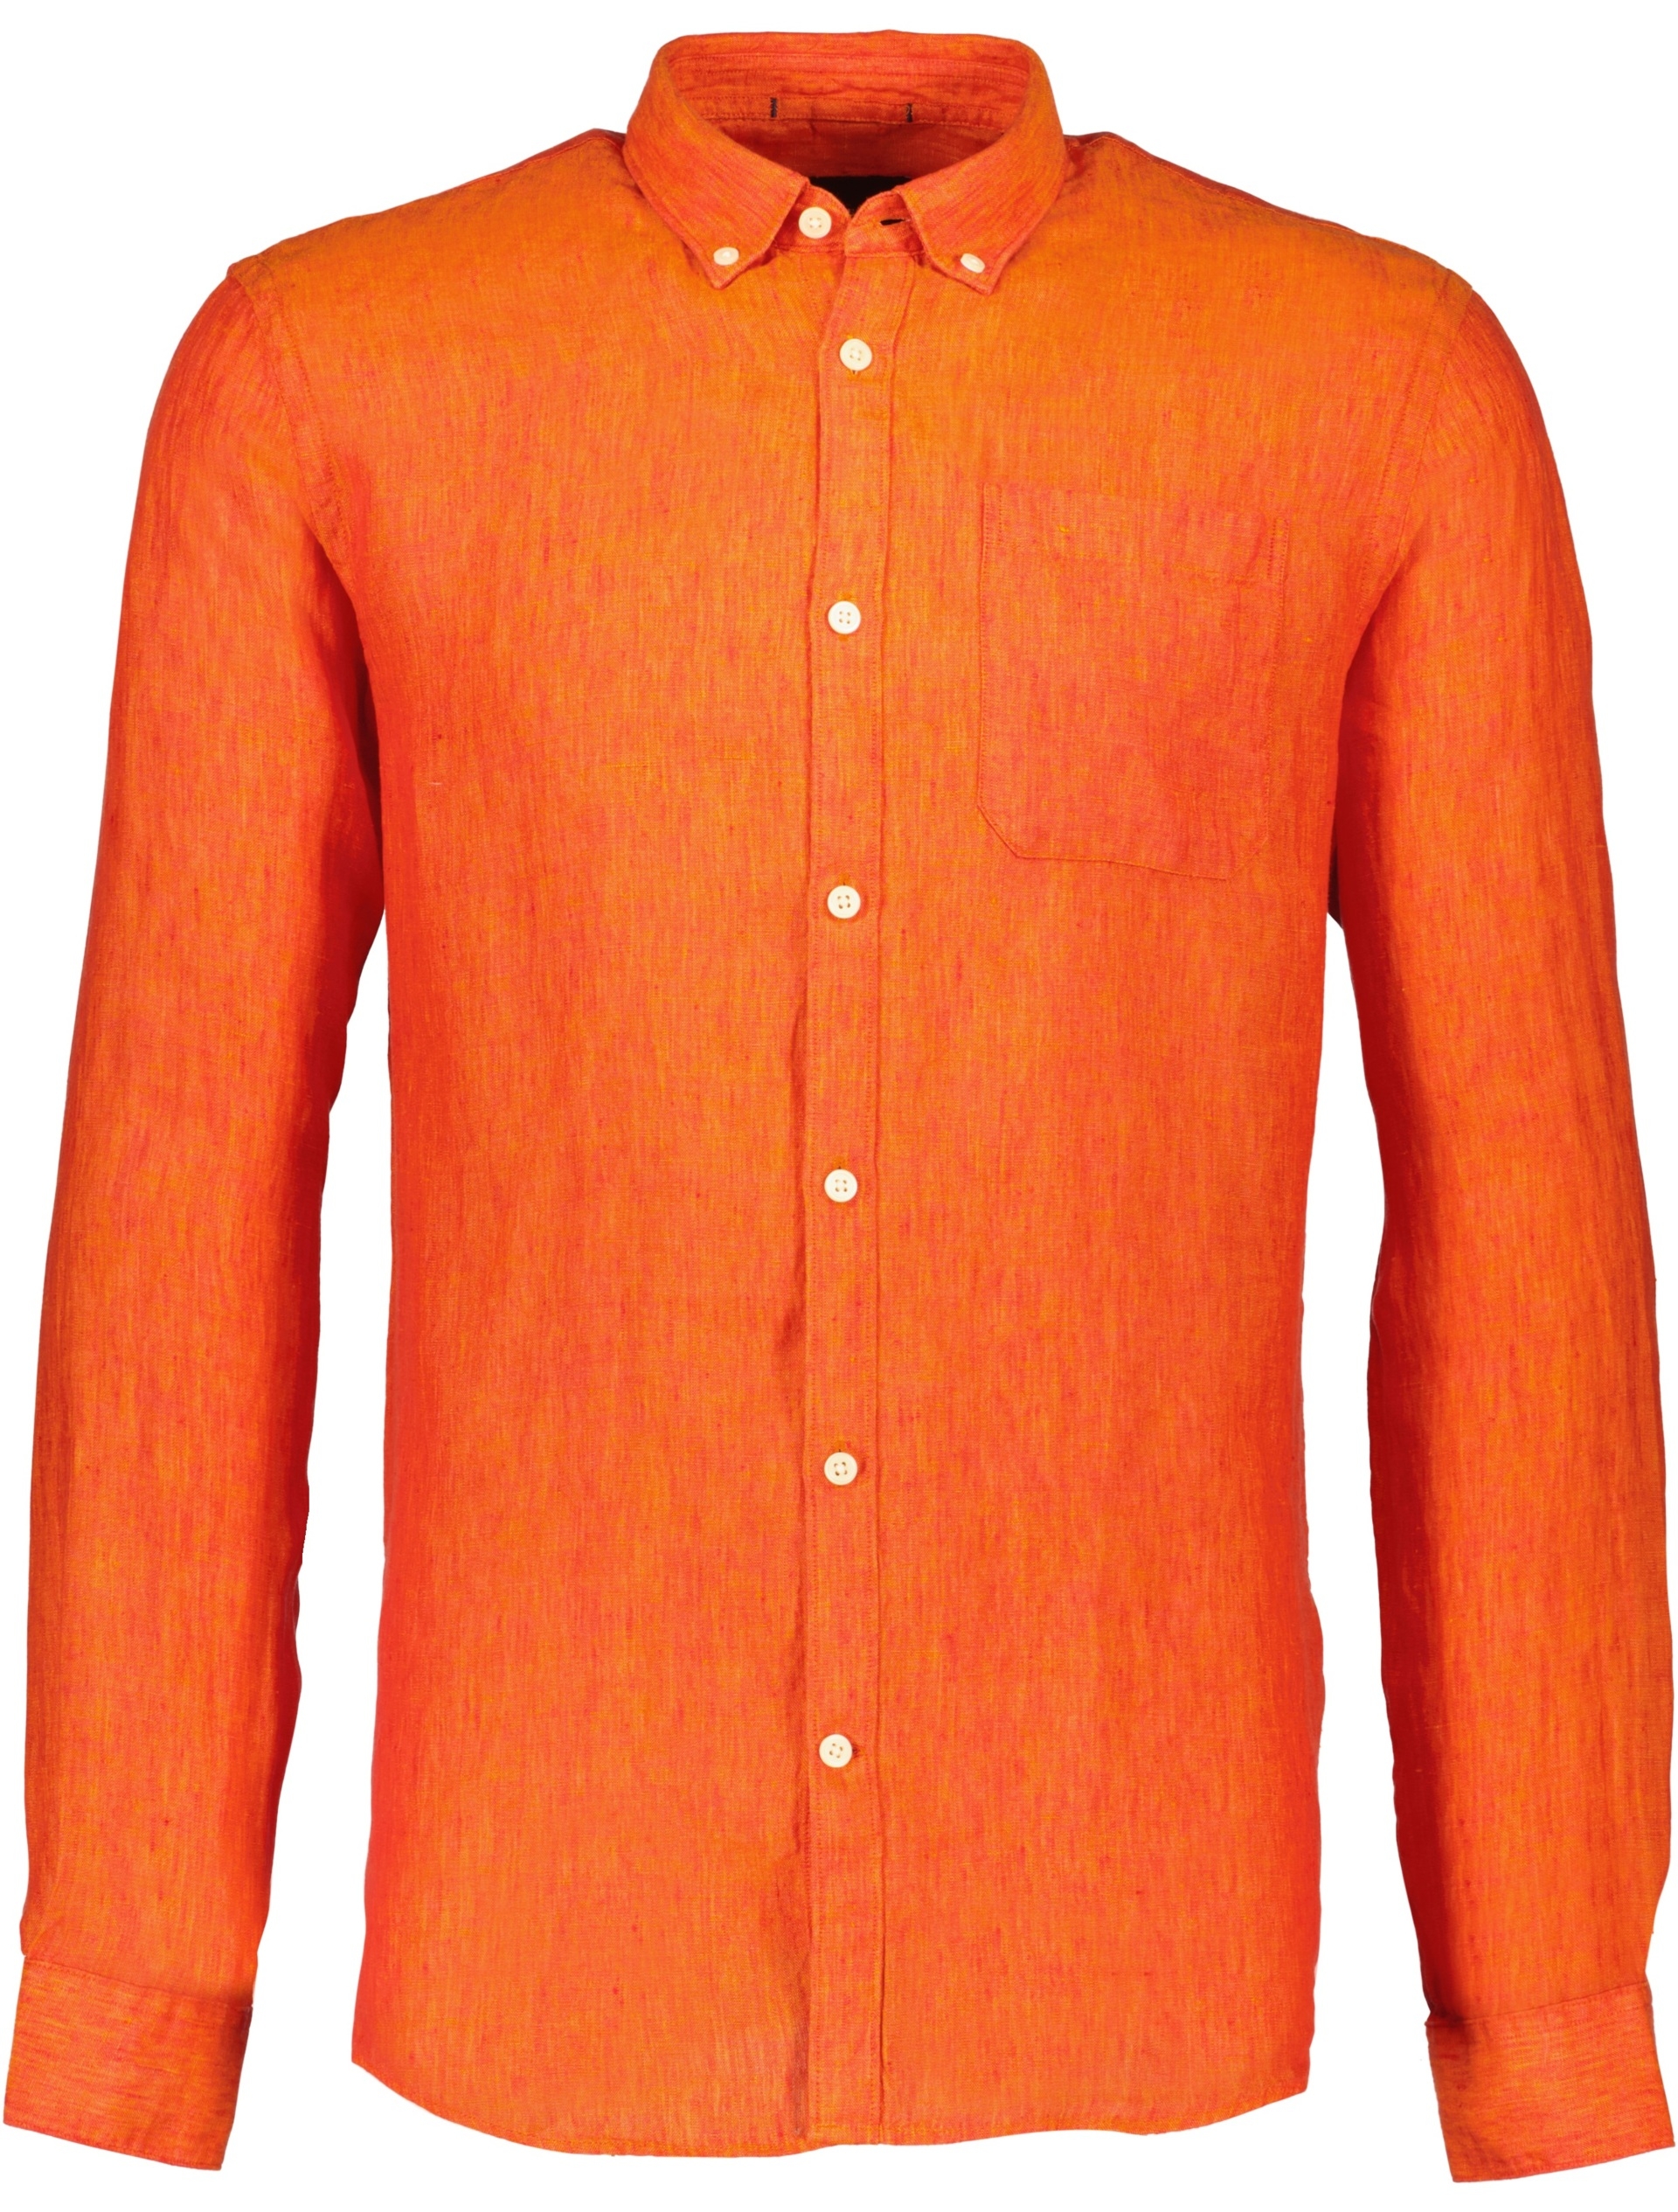 Lindbergh Linnen overhemd oranje / orange mel